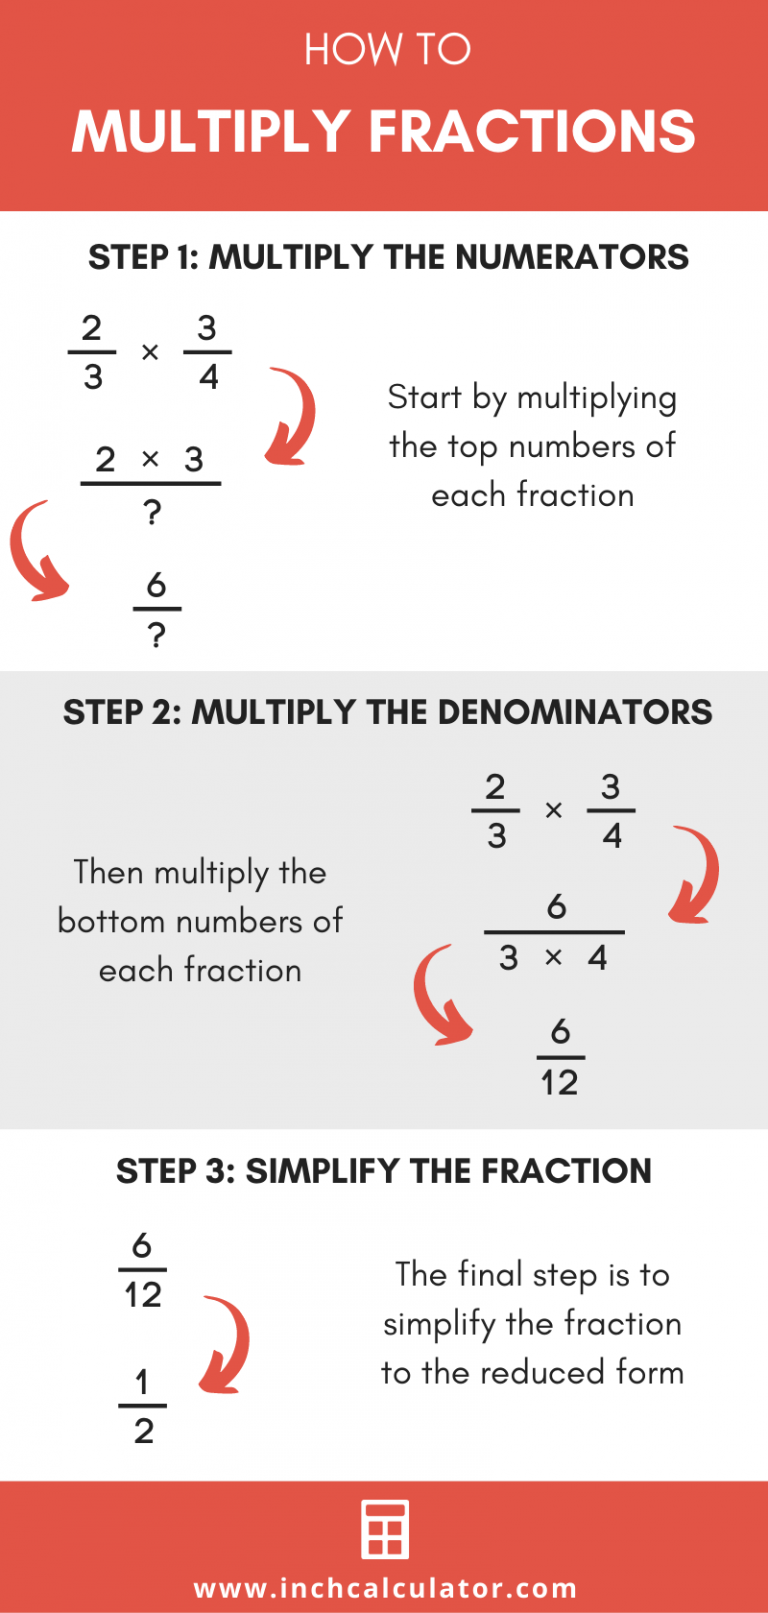 mix fractions calculator